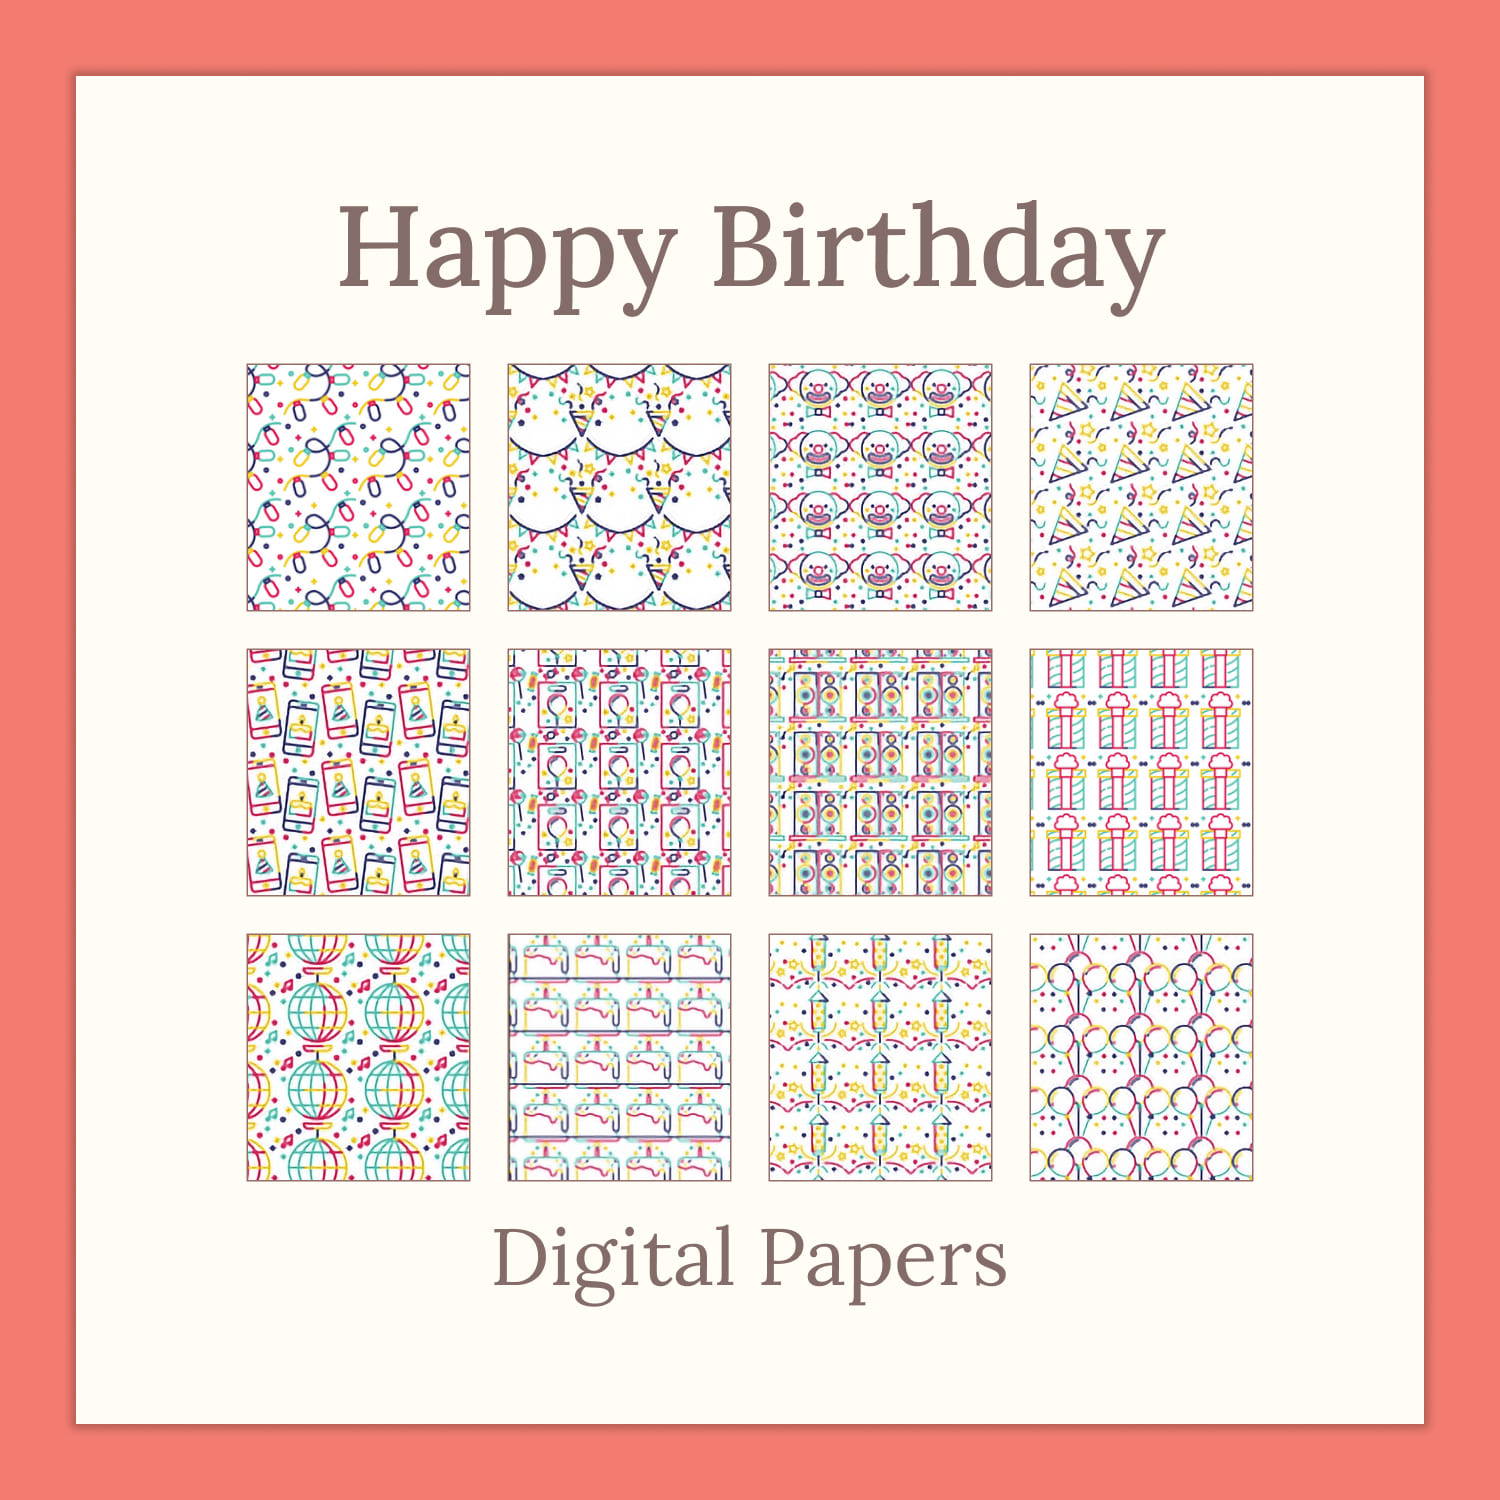 Happy Birthday Digital Papers, Party JPG.